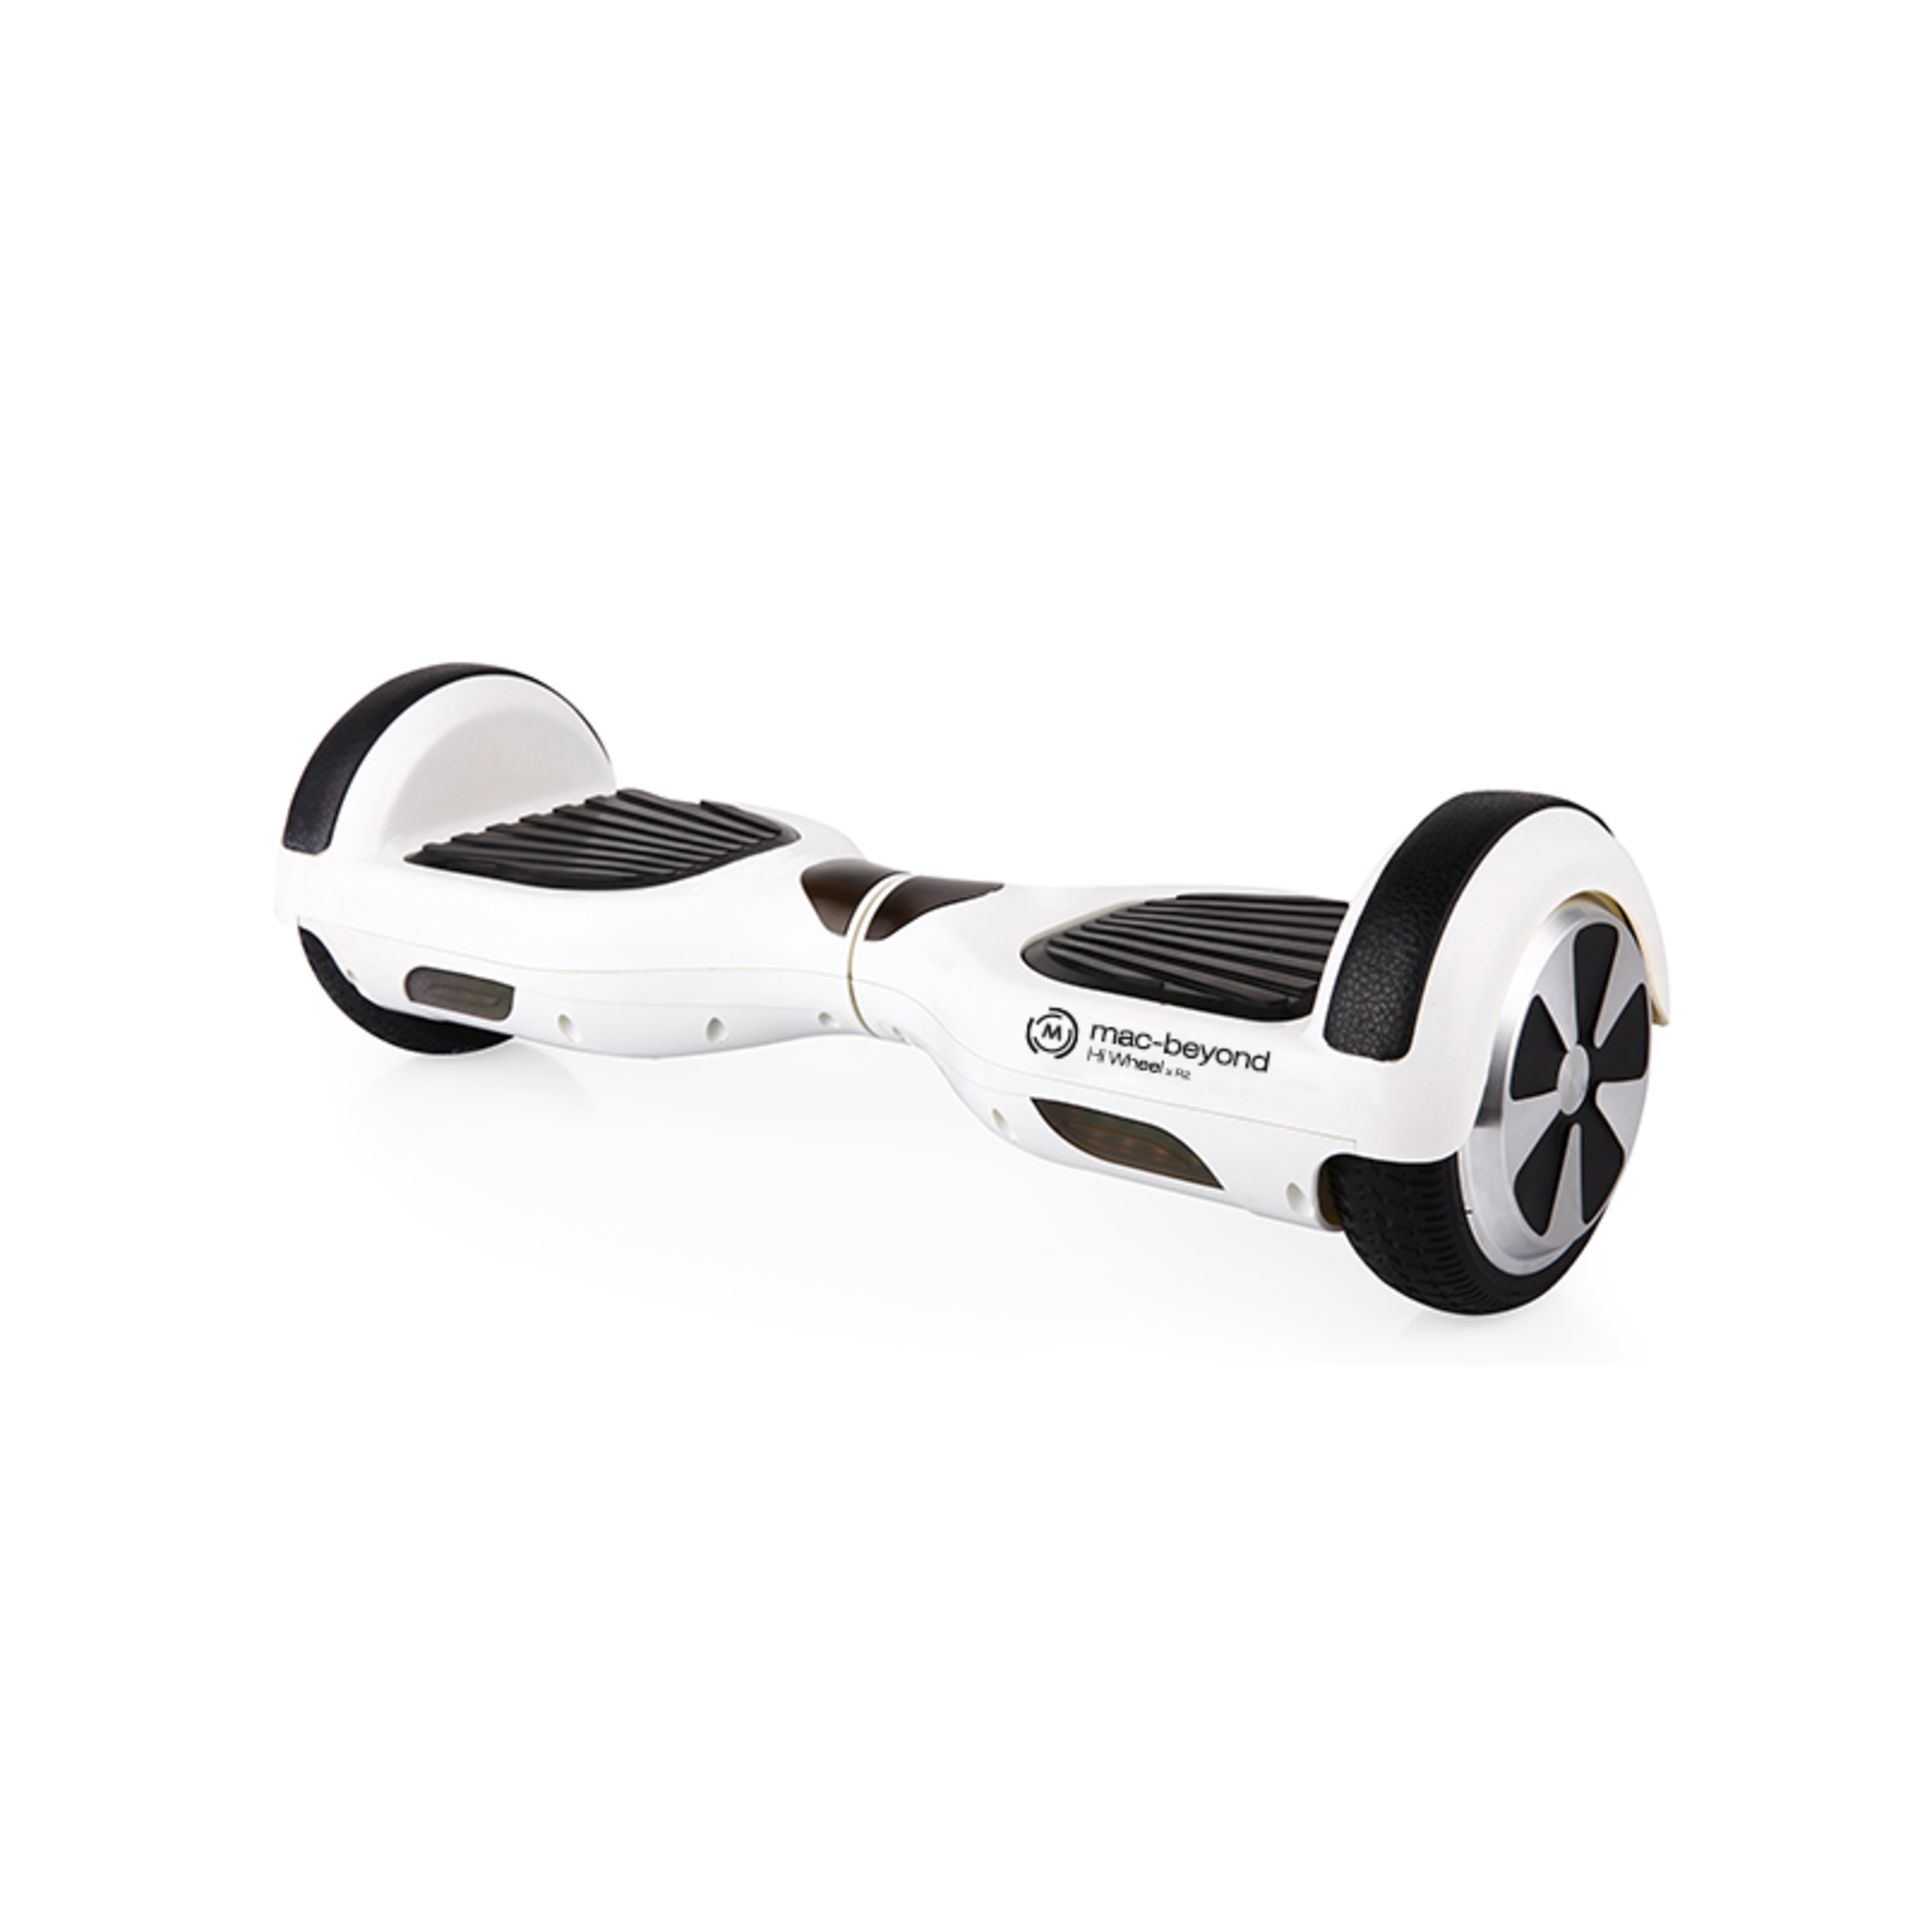 macbeyond x Hi wheel Series, White Modelæ R2 LED (6.5 inch wheels, Best Seller) Smart personal - Image 2 of 14